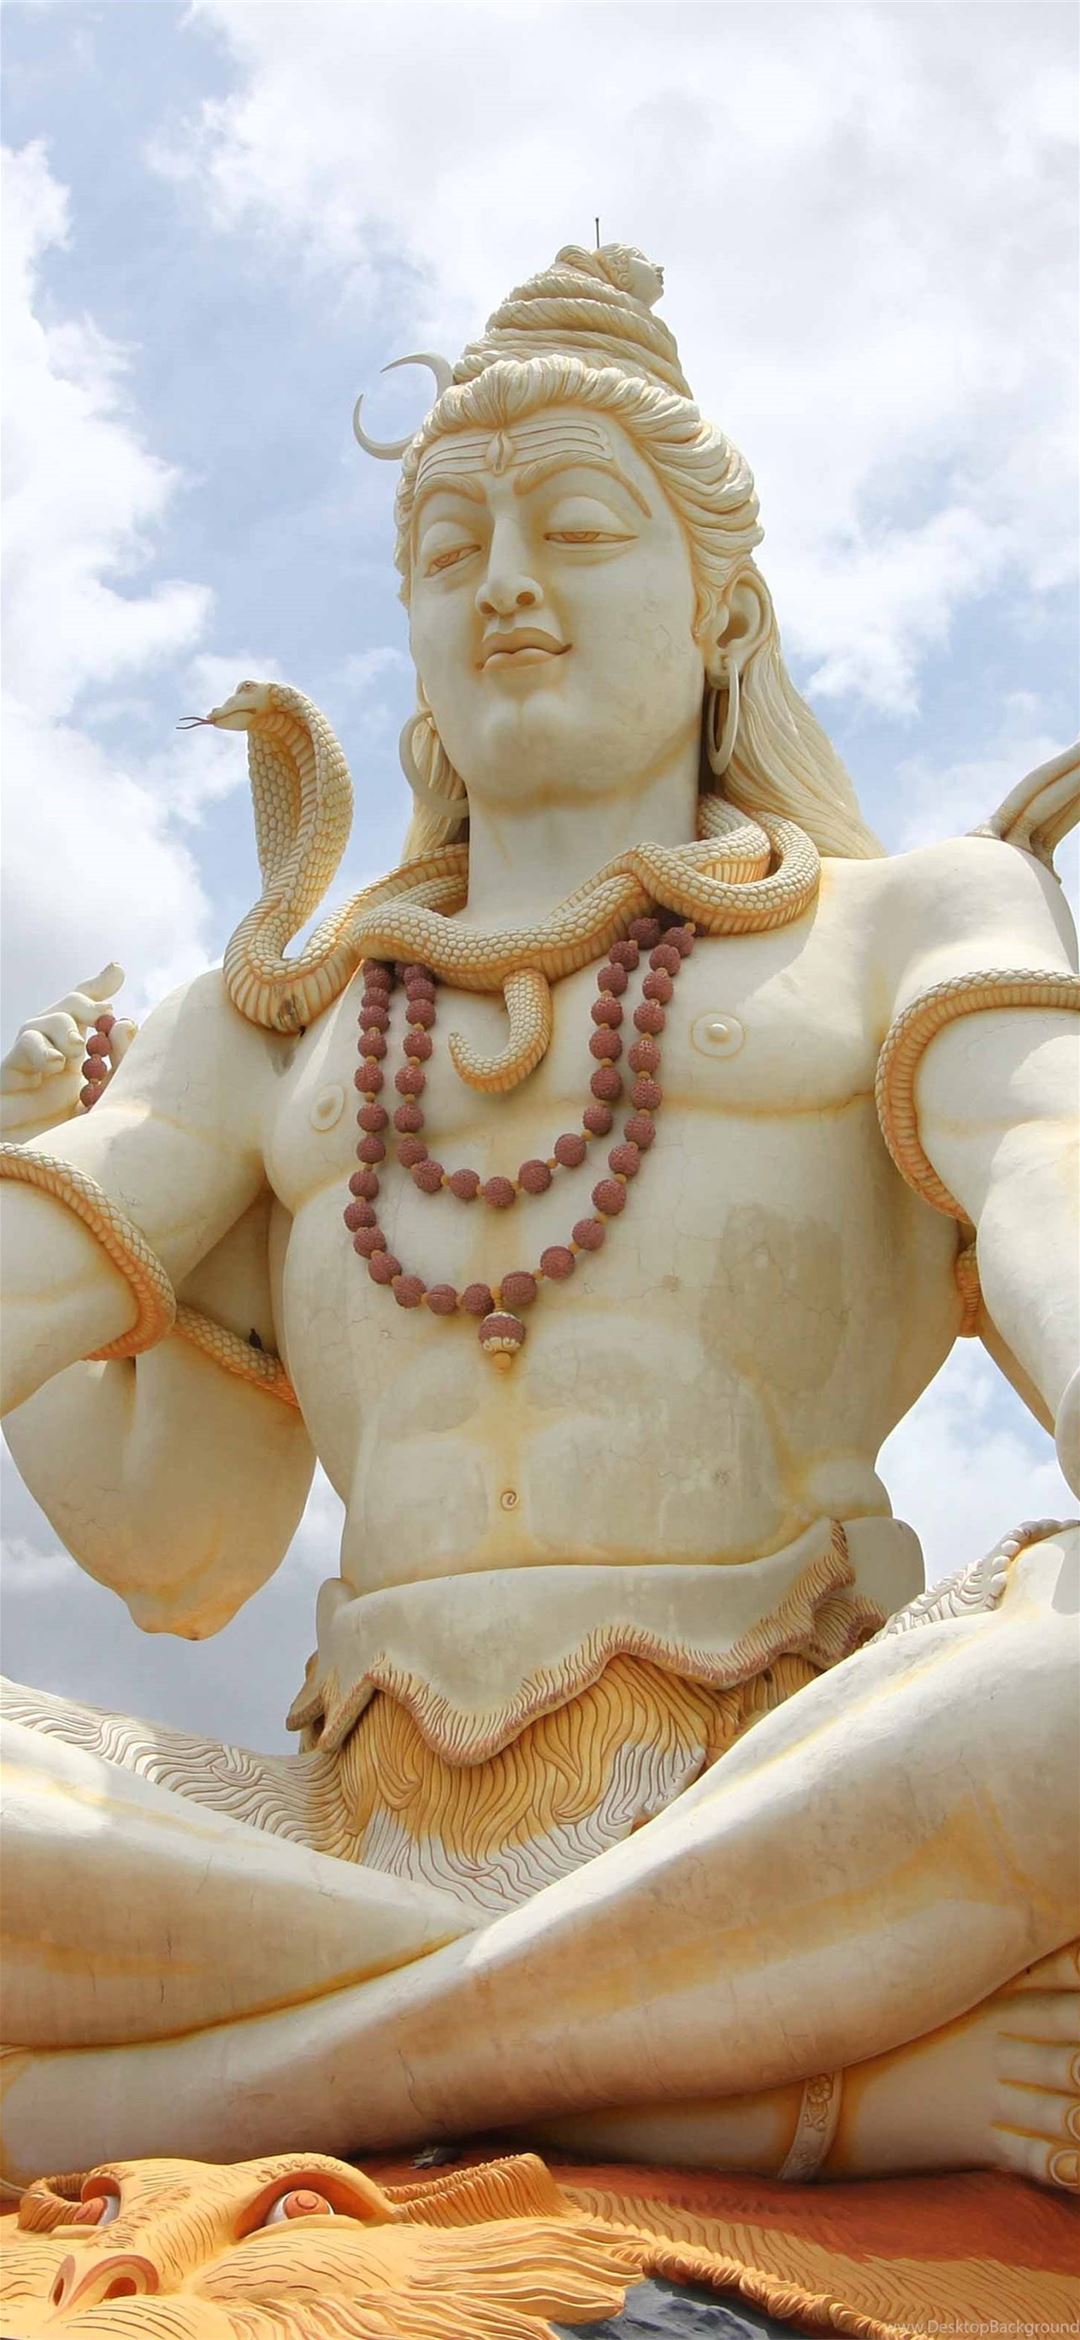 Hindu God Lord Shiva Big Idol Hd Desktop Backgroun... iPhone Wallpapers  Free Download